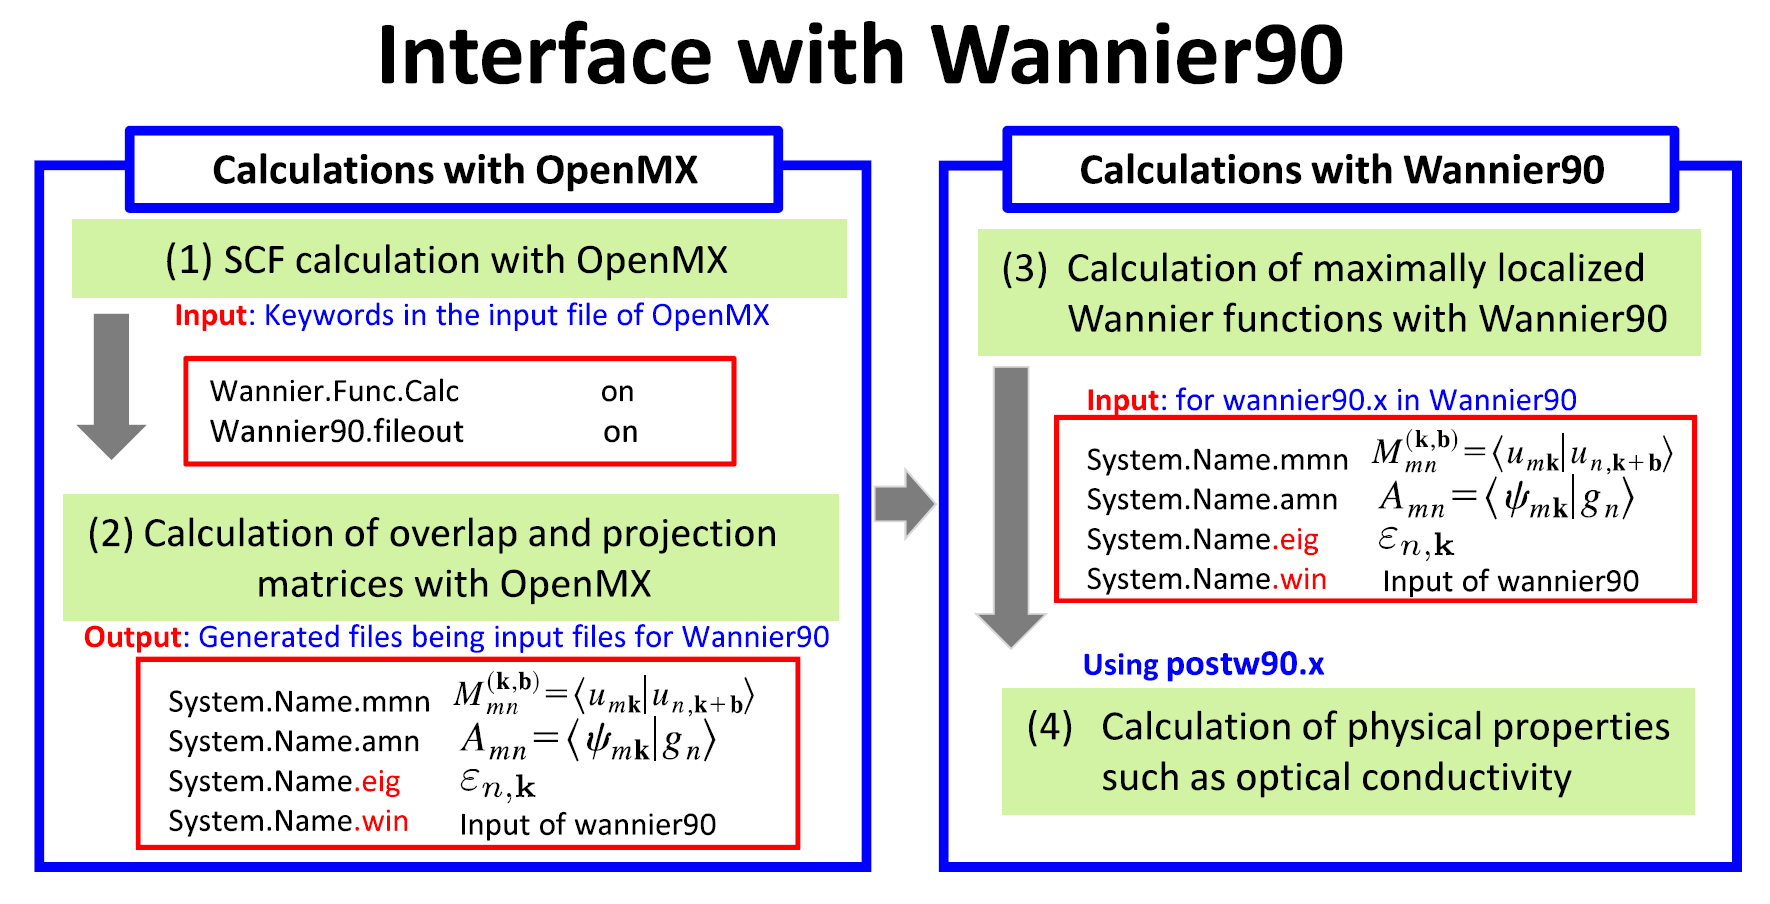 \begin{figure}\begin{center}
\epsfig{file=OpenMX_Wannier90.eps,width=16.0cm}
\end{center}
\end{figure}